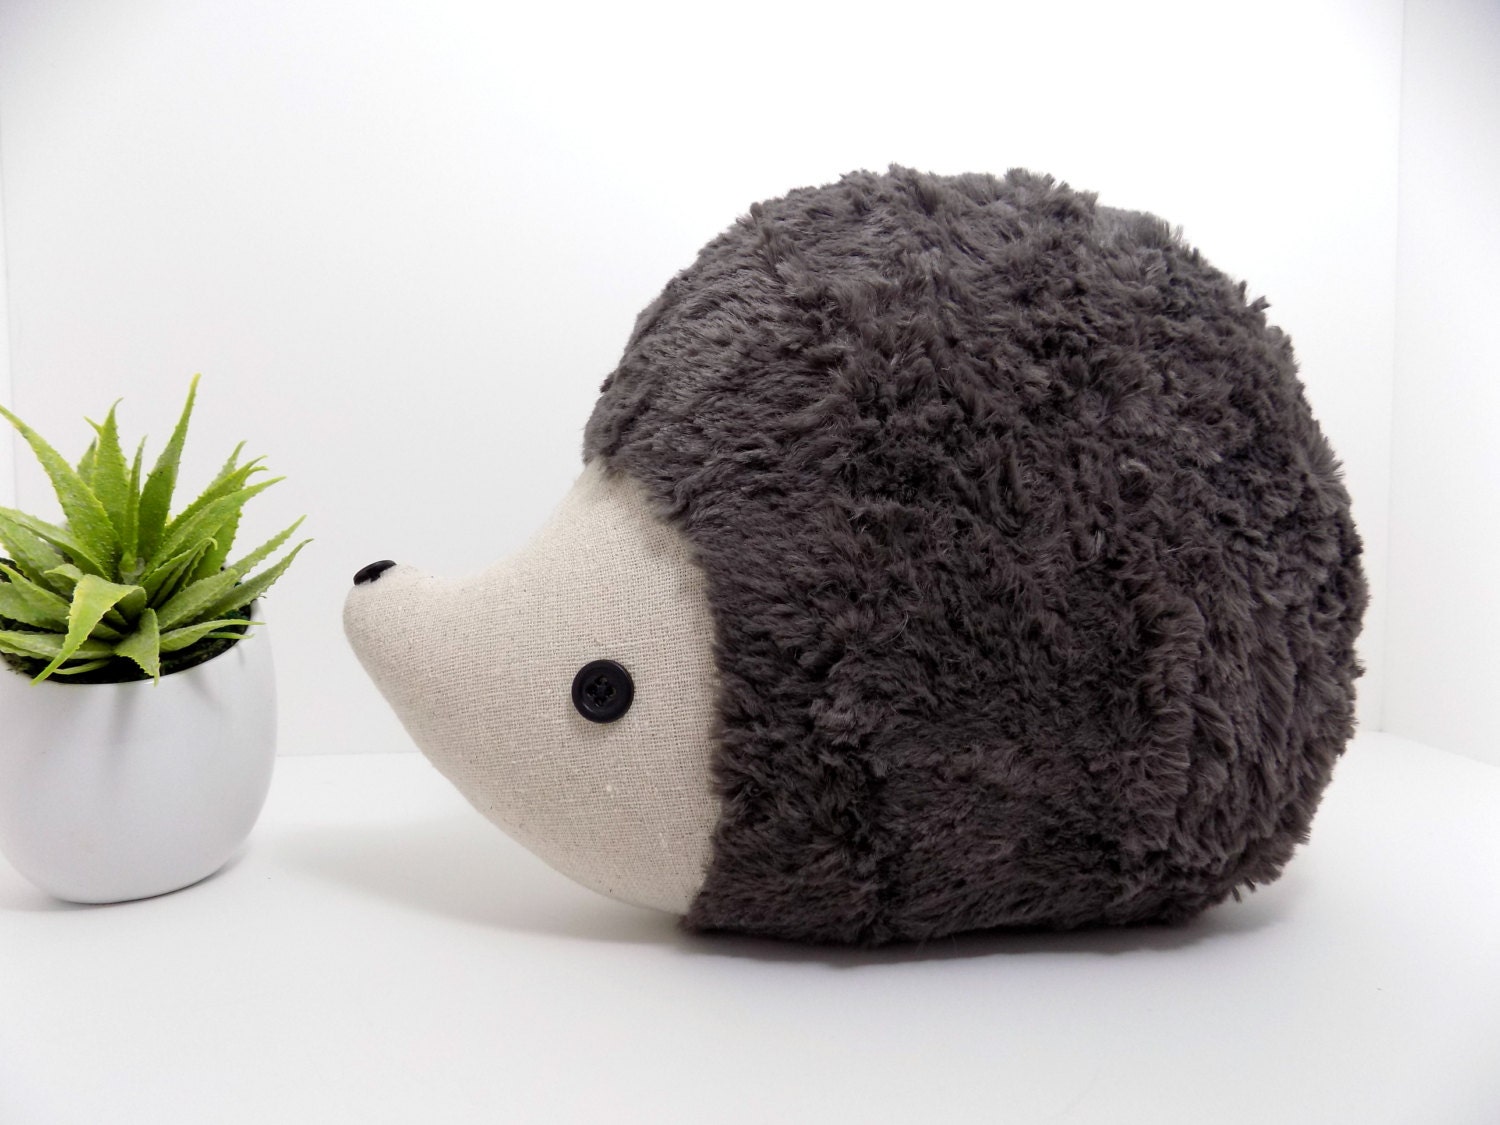 Hedgehog pillow plush in pewter grey/brown hedgehog stuffed